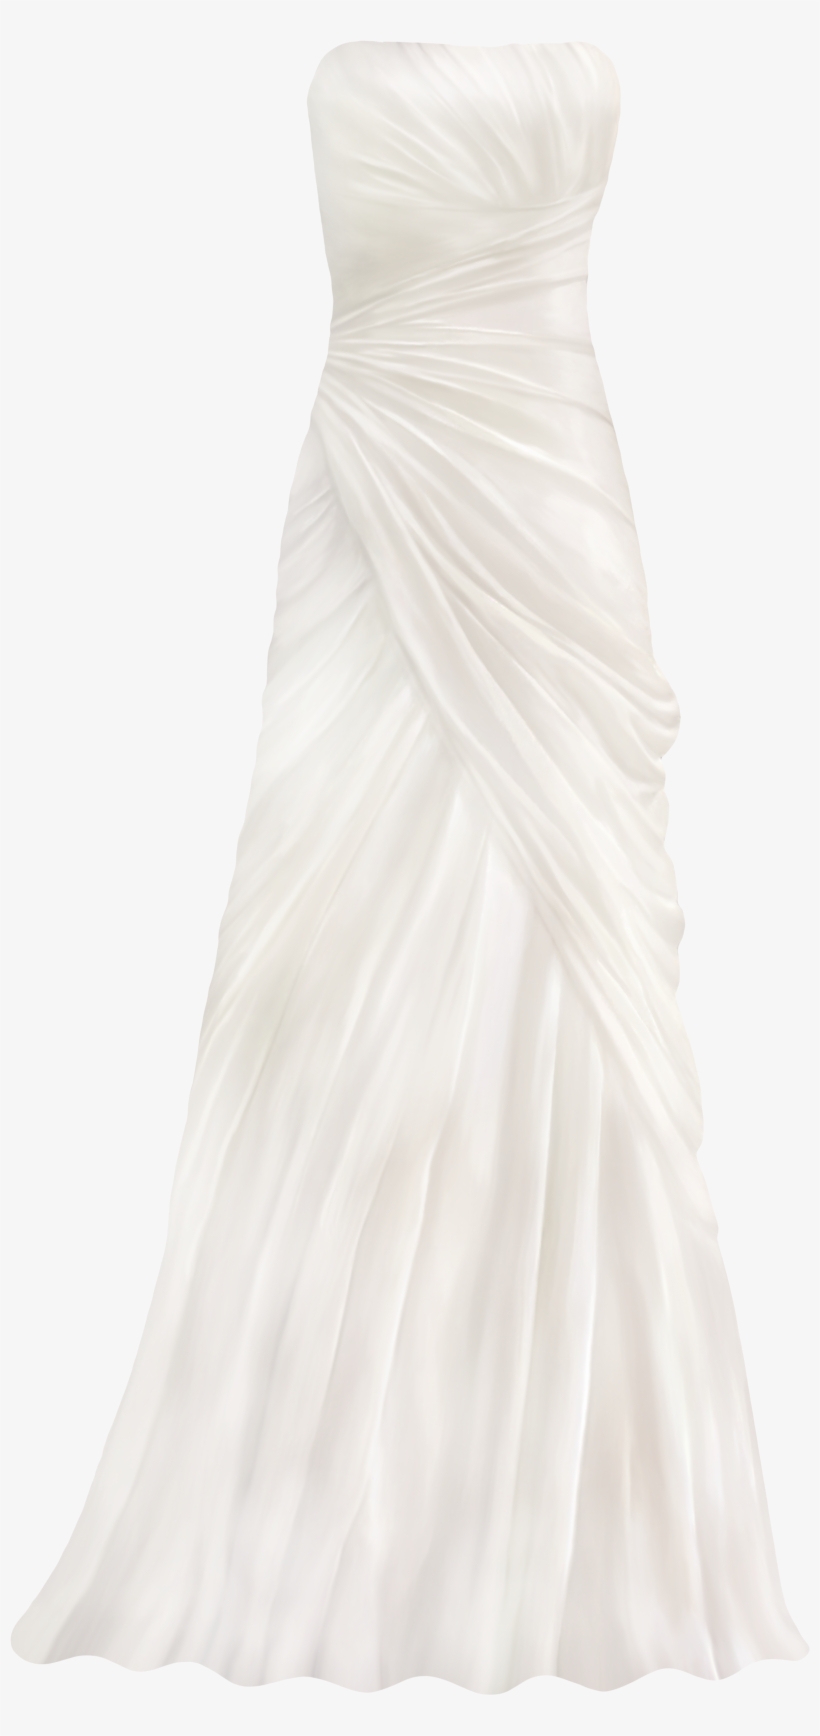 Wedding Dress Png Clip Art - Gown, transparent png #2732677